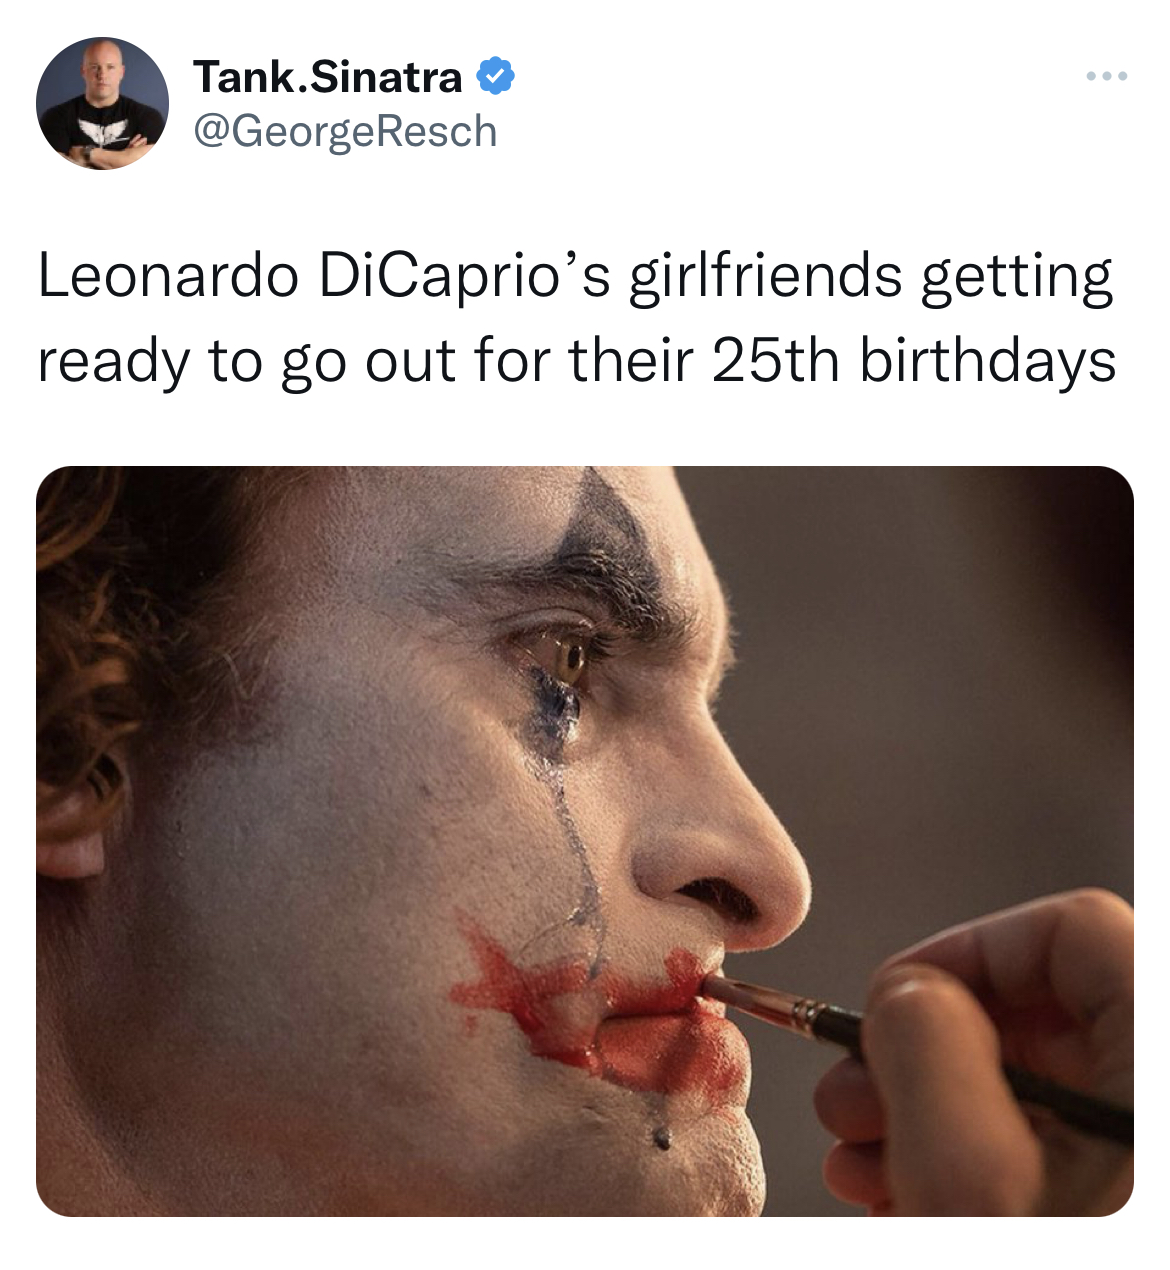 Leonardo DiCaprio Girlfriend Memes - leonardo dicaprio girlfriend meme joker - Tank.Sinatra ... Leonardo DiCaprio's girlfriends getting ready to go out for their 25th birthdays